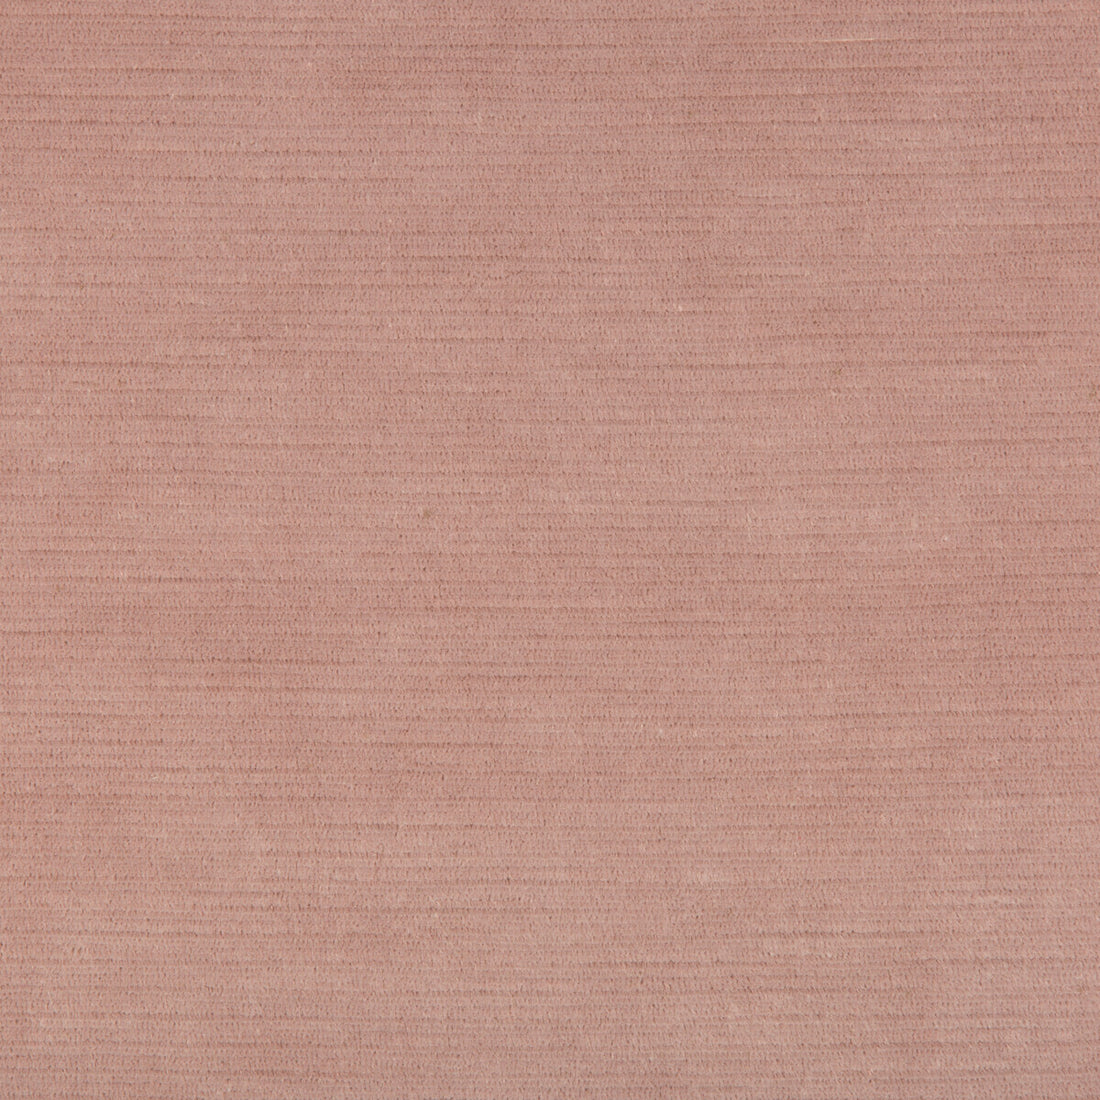 Gemma Velvet fabric in dusk color - pattern 2018148.10.0 - by Lee Jofa in the Gemma Performance Velvet collection